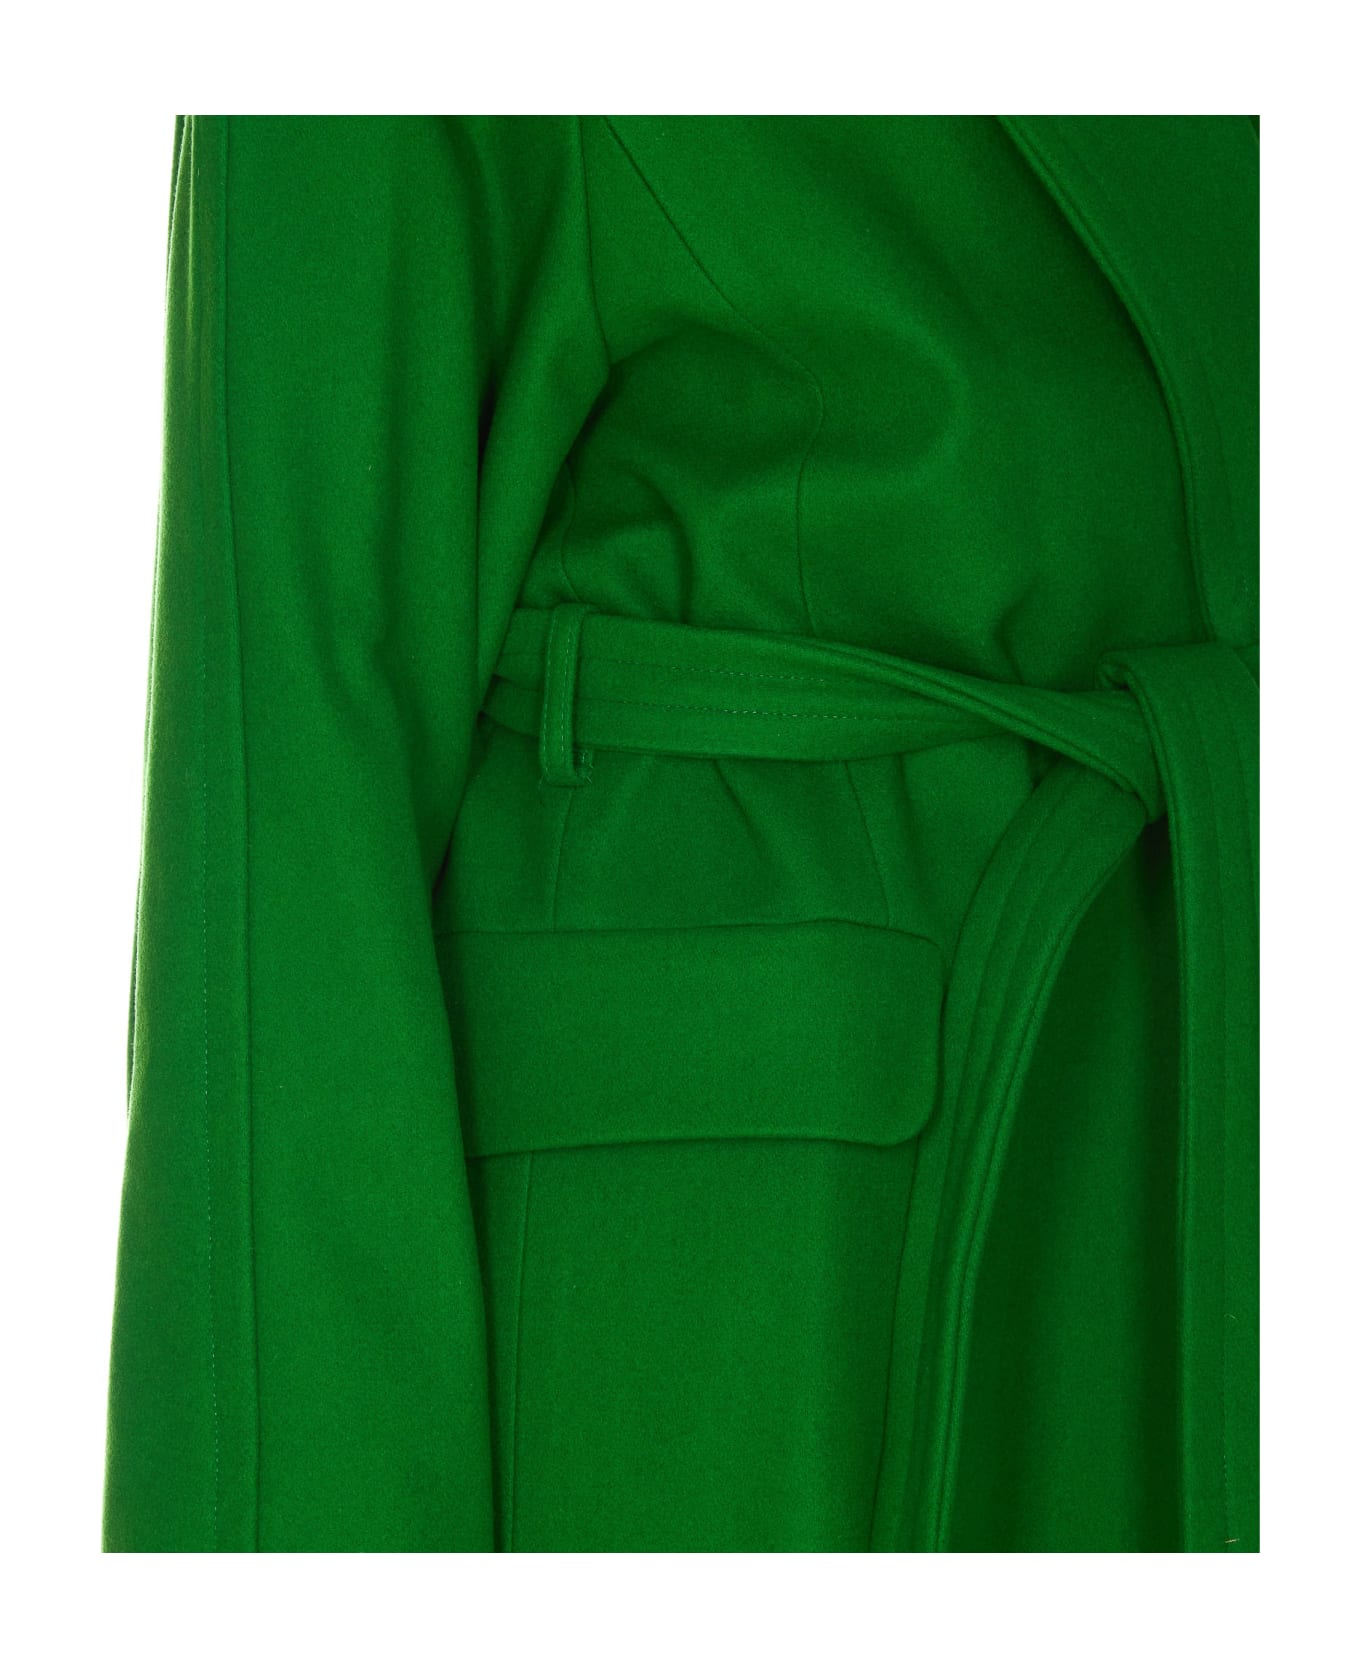 A.P.C. 'florence' Coat In Green Virgin Wool Blend - Green